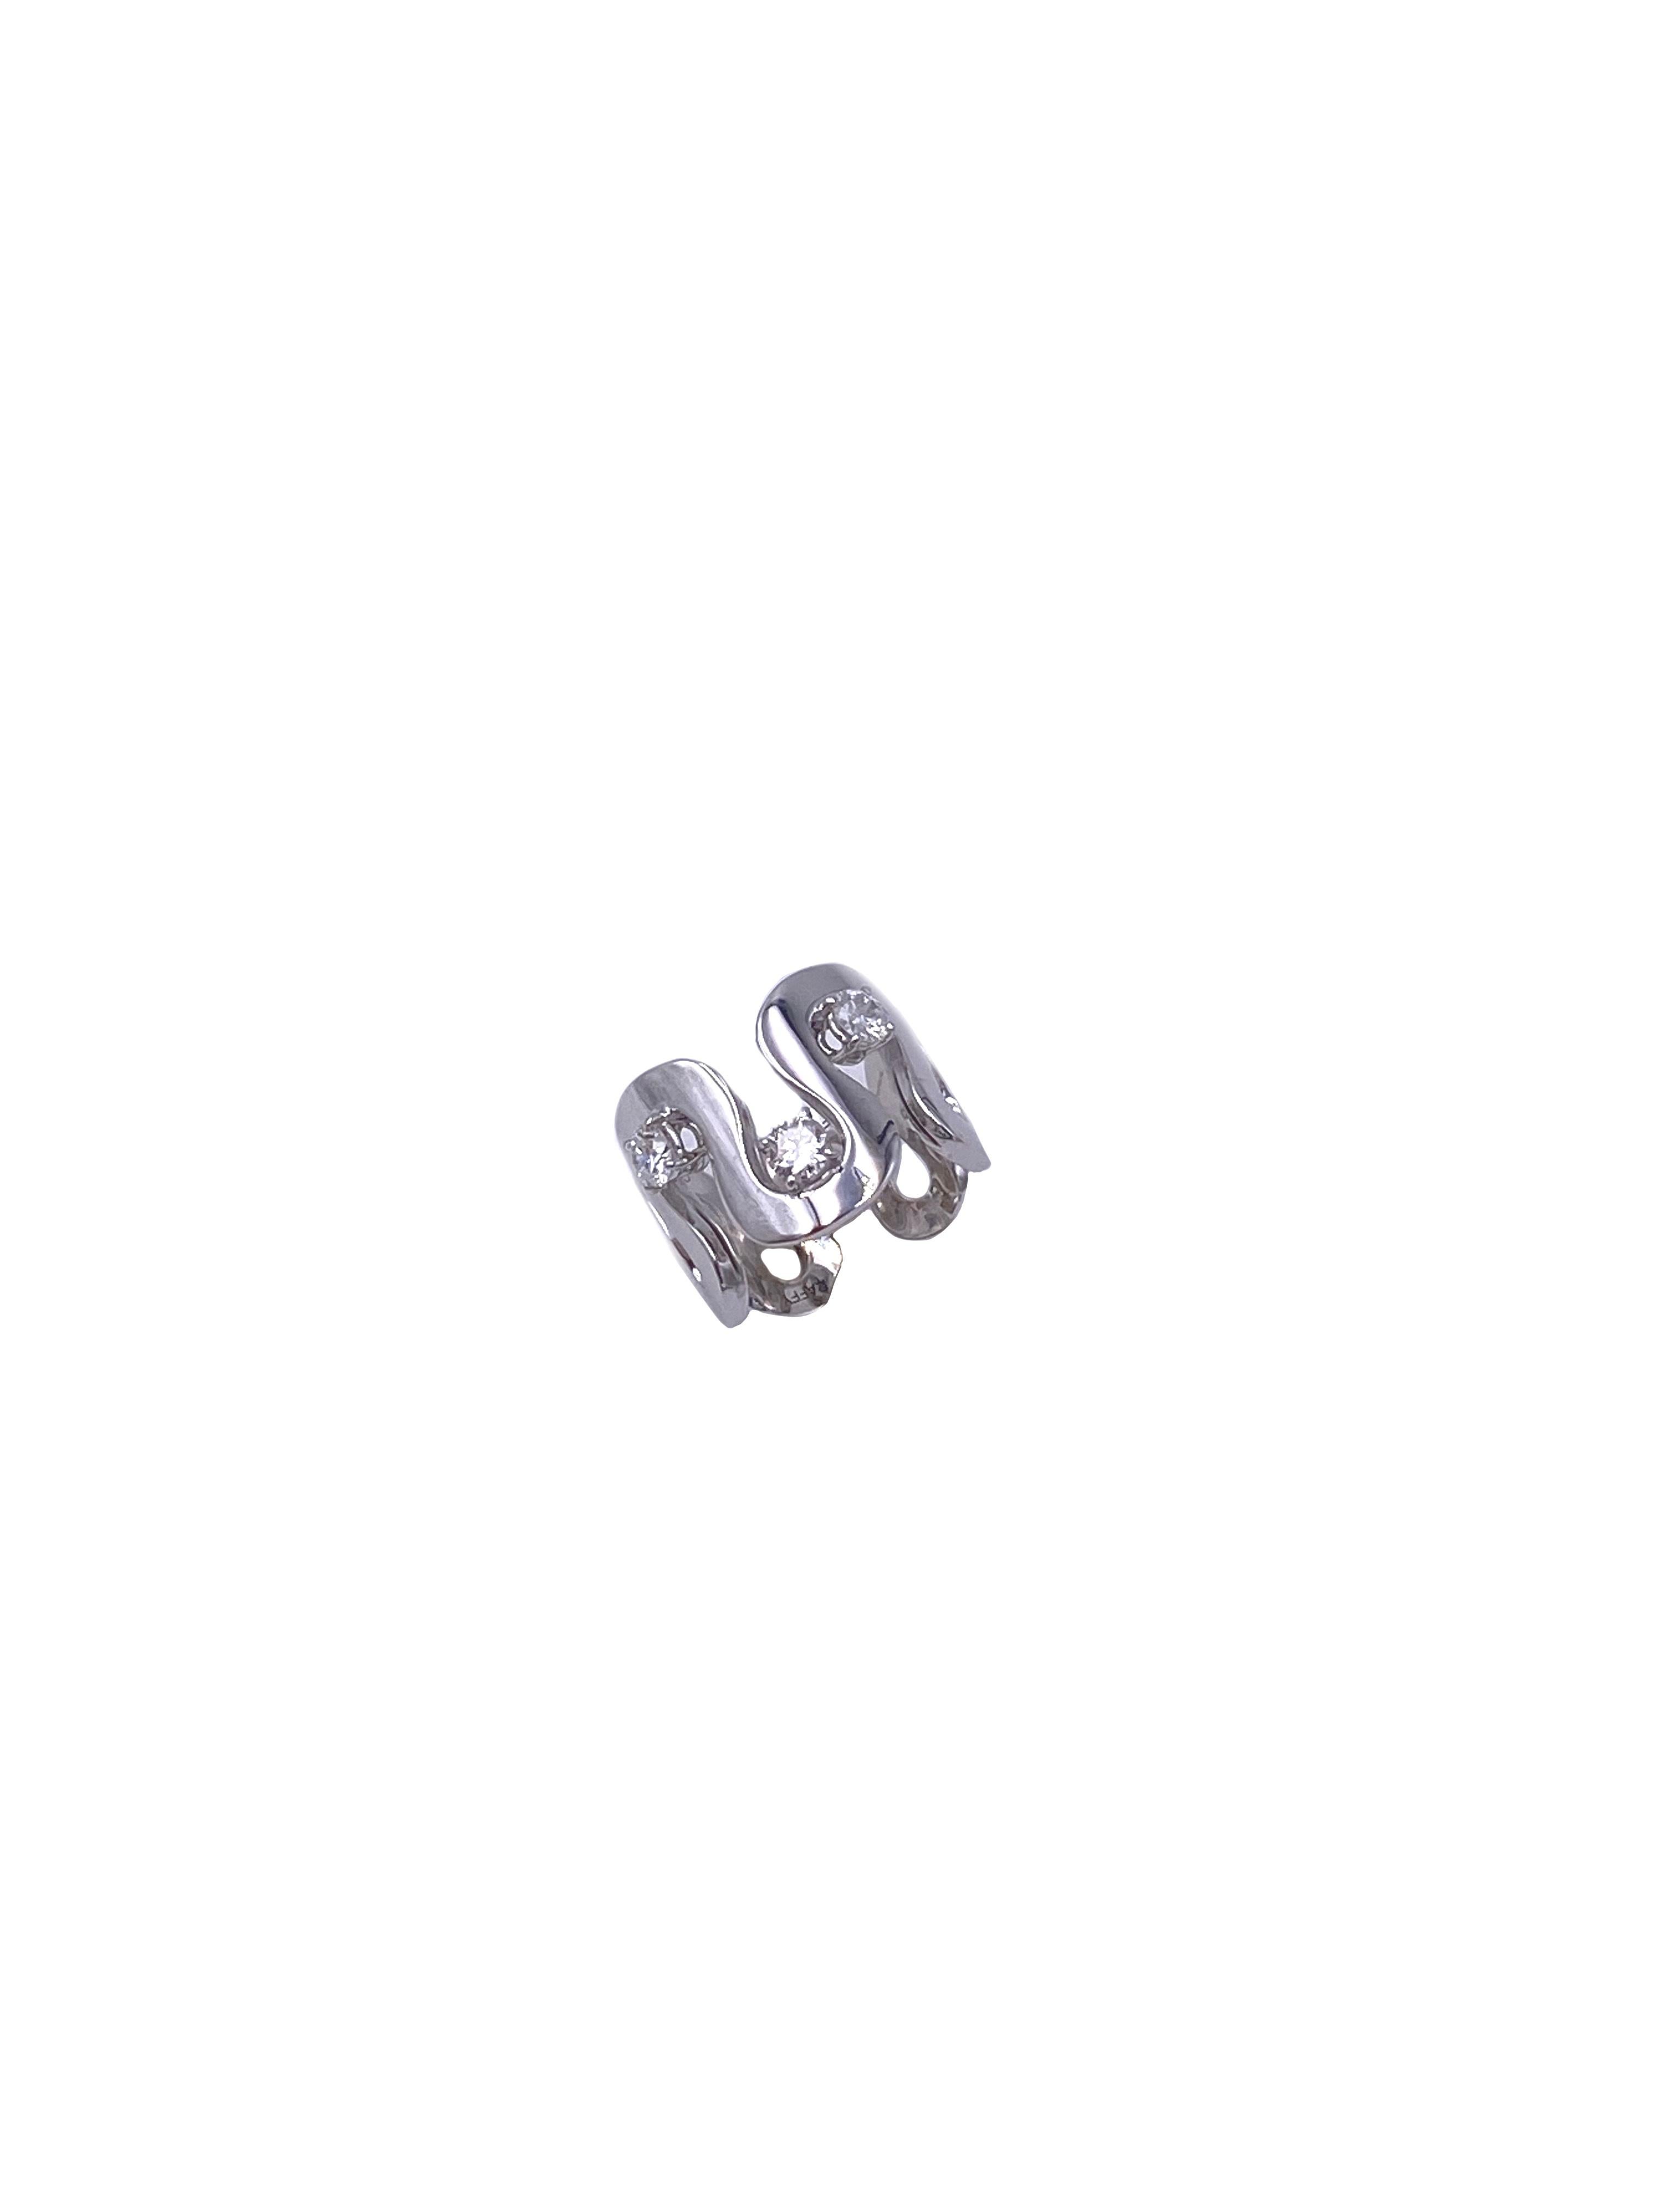 Brilliant Cut 0.90 Carat White Diamonds 18K White Gold Trilogy Unisex Band Design Ring For Sale